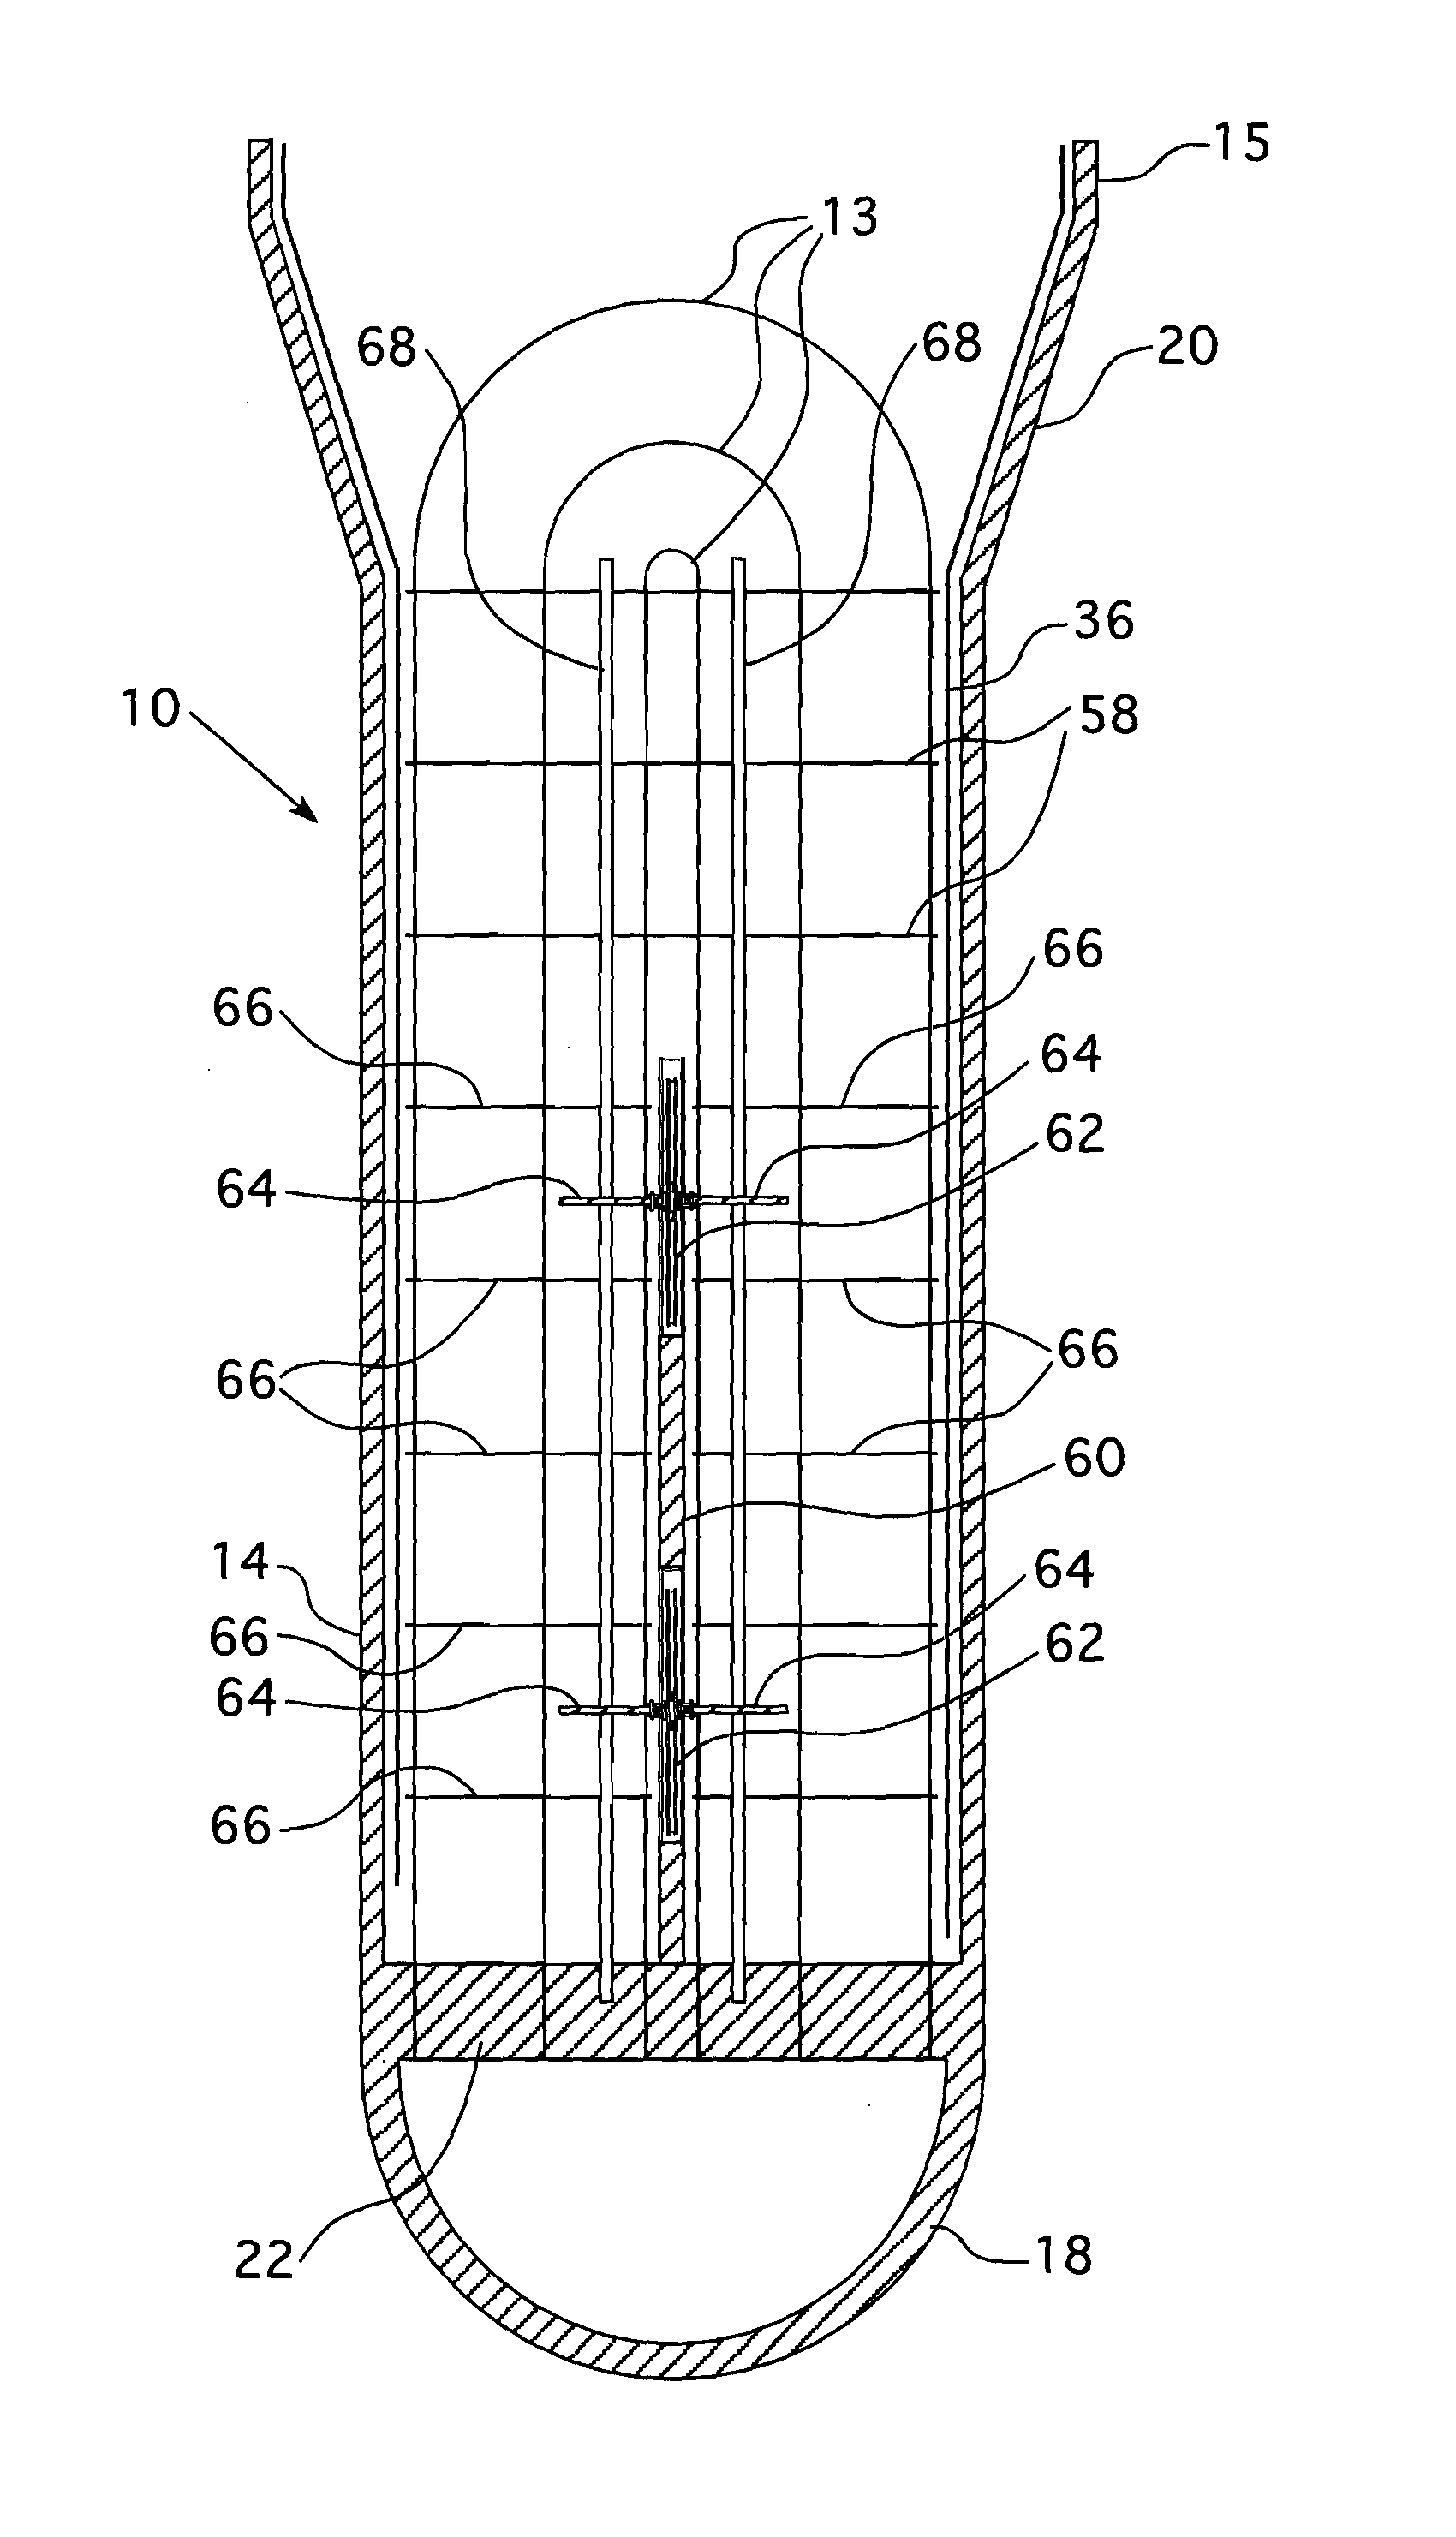 Anti-vibration tube support plate arrangement for steam generators